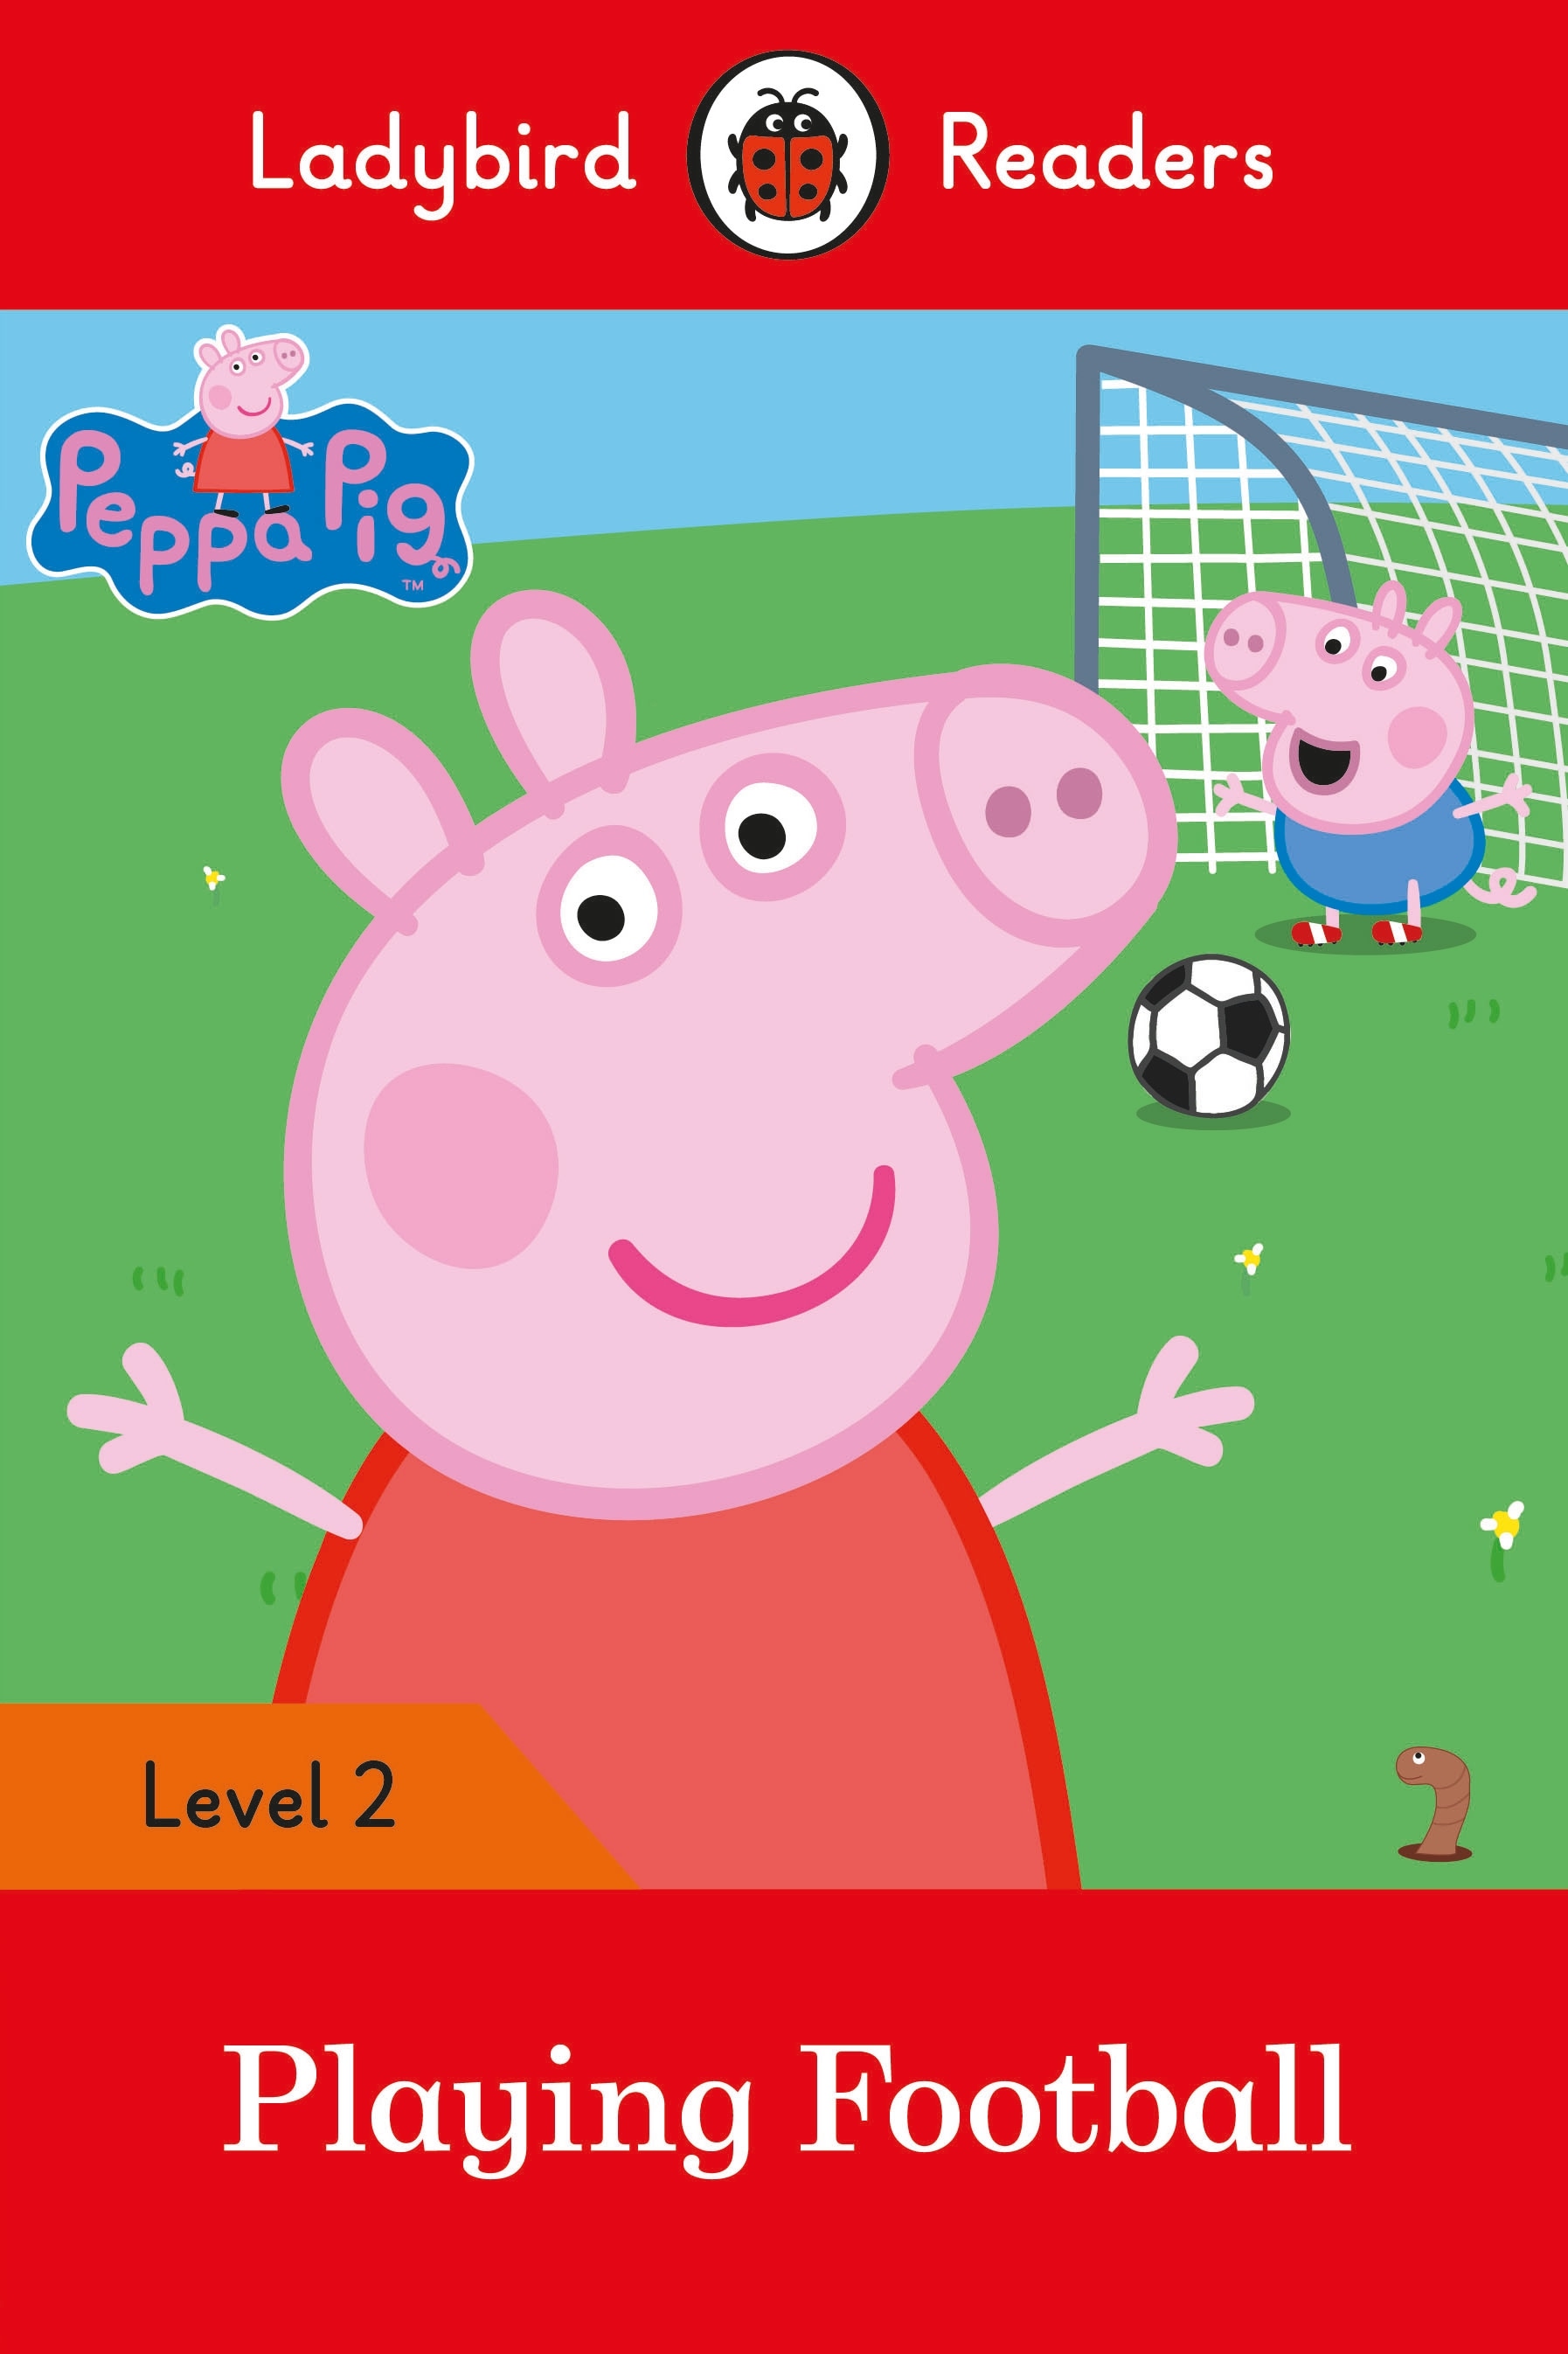 Book “Peppa Pig: Playing Football- Ladybird Readers Level 2” by Ladybird, Peppa Pig — January 25, 2018